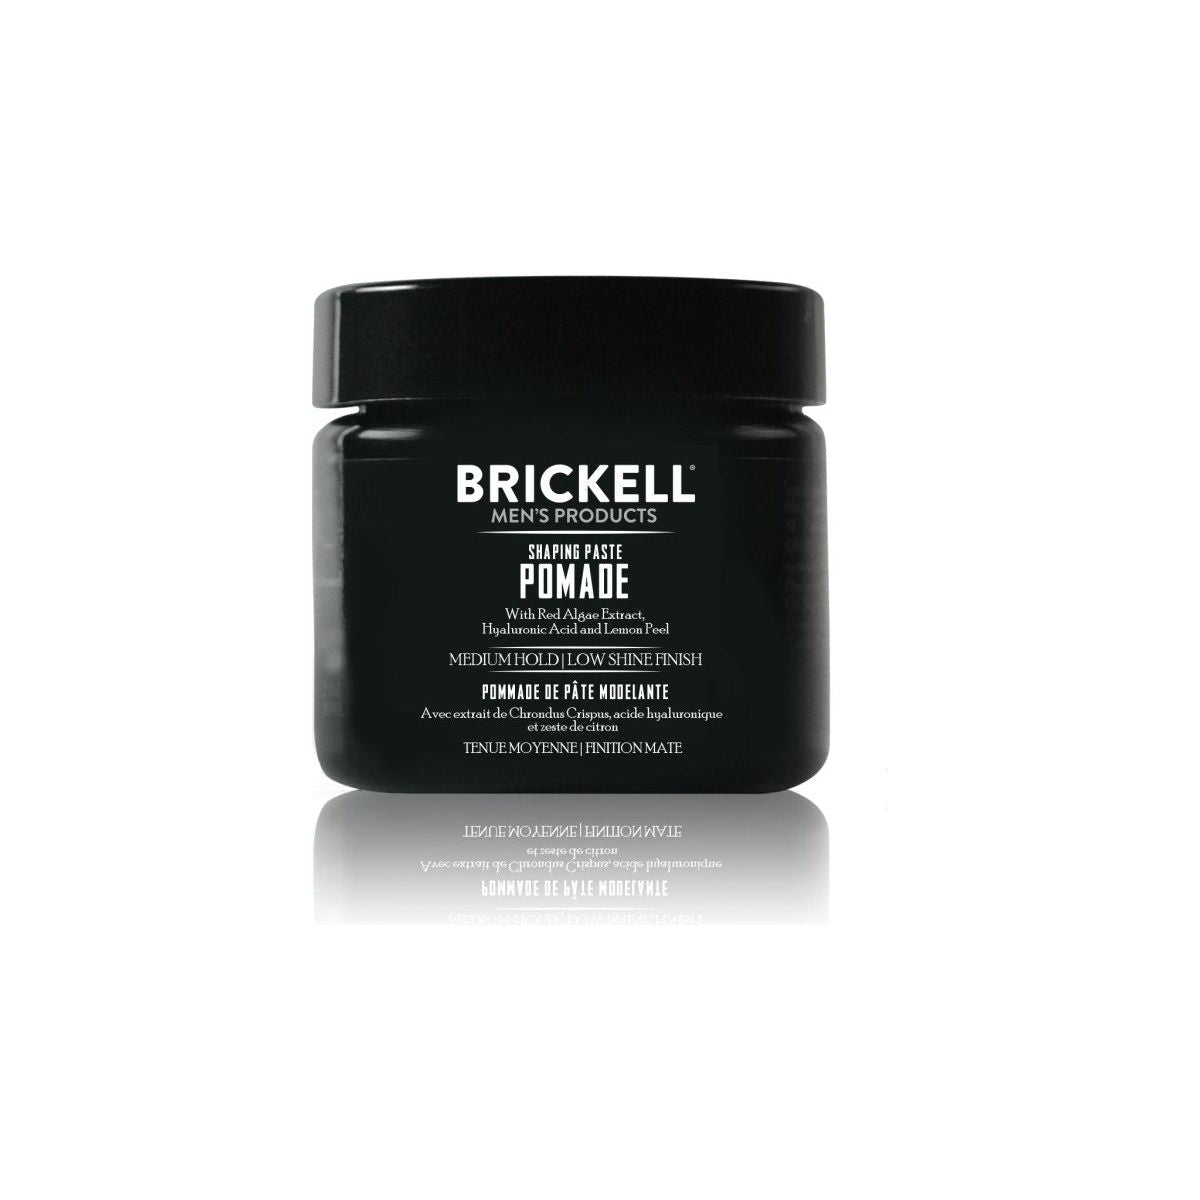 Brickell Shaping Paste Pomade - 59ml - Glam Global UK